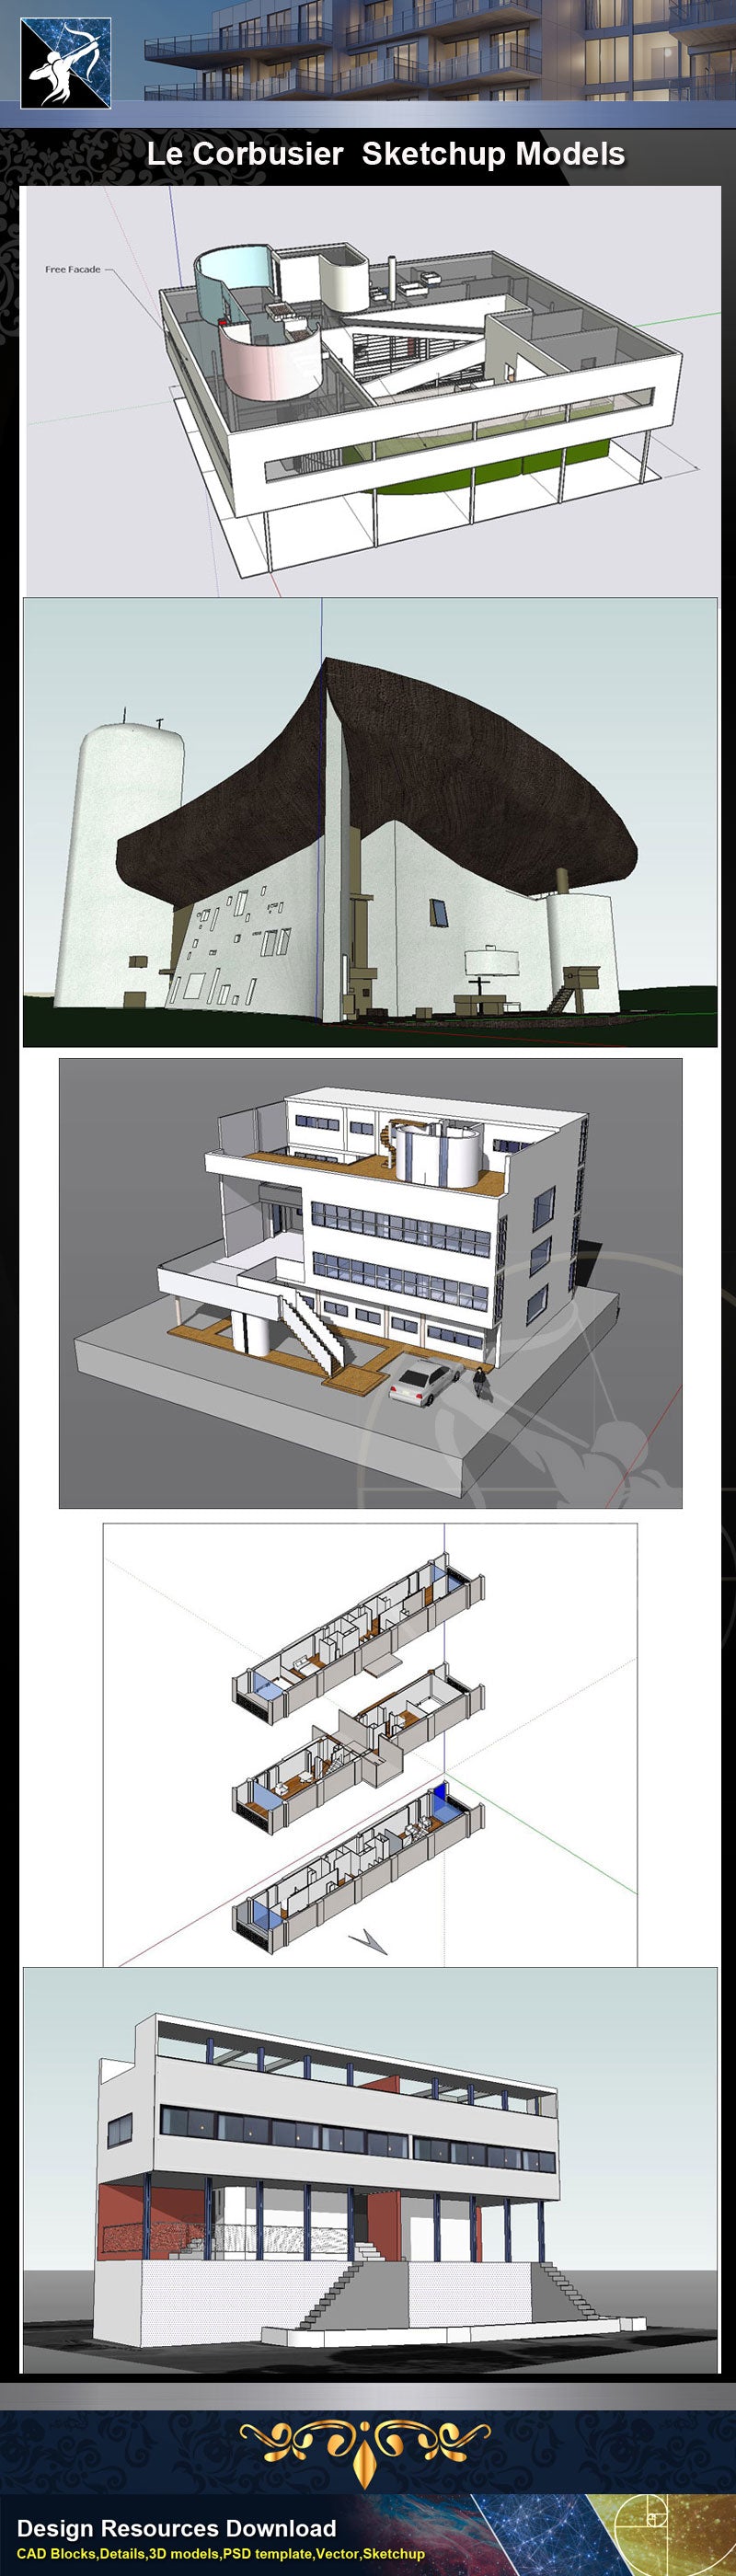 Famous Architecture 24 Kinds Of Le Corbusier Sketchup 3D Models